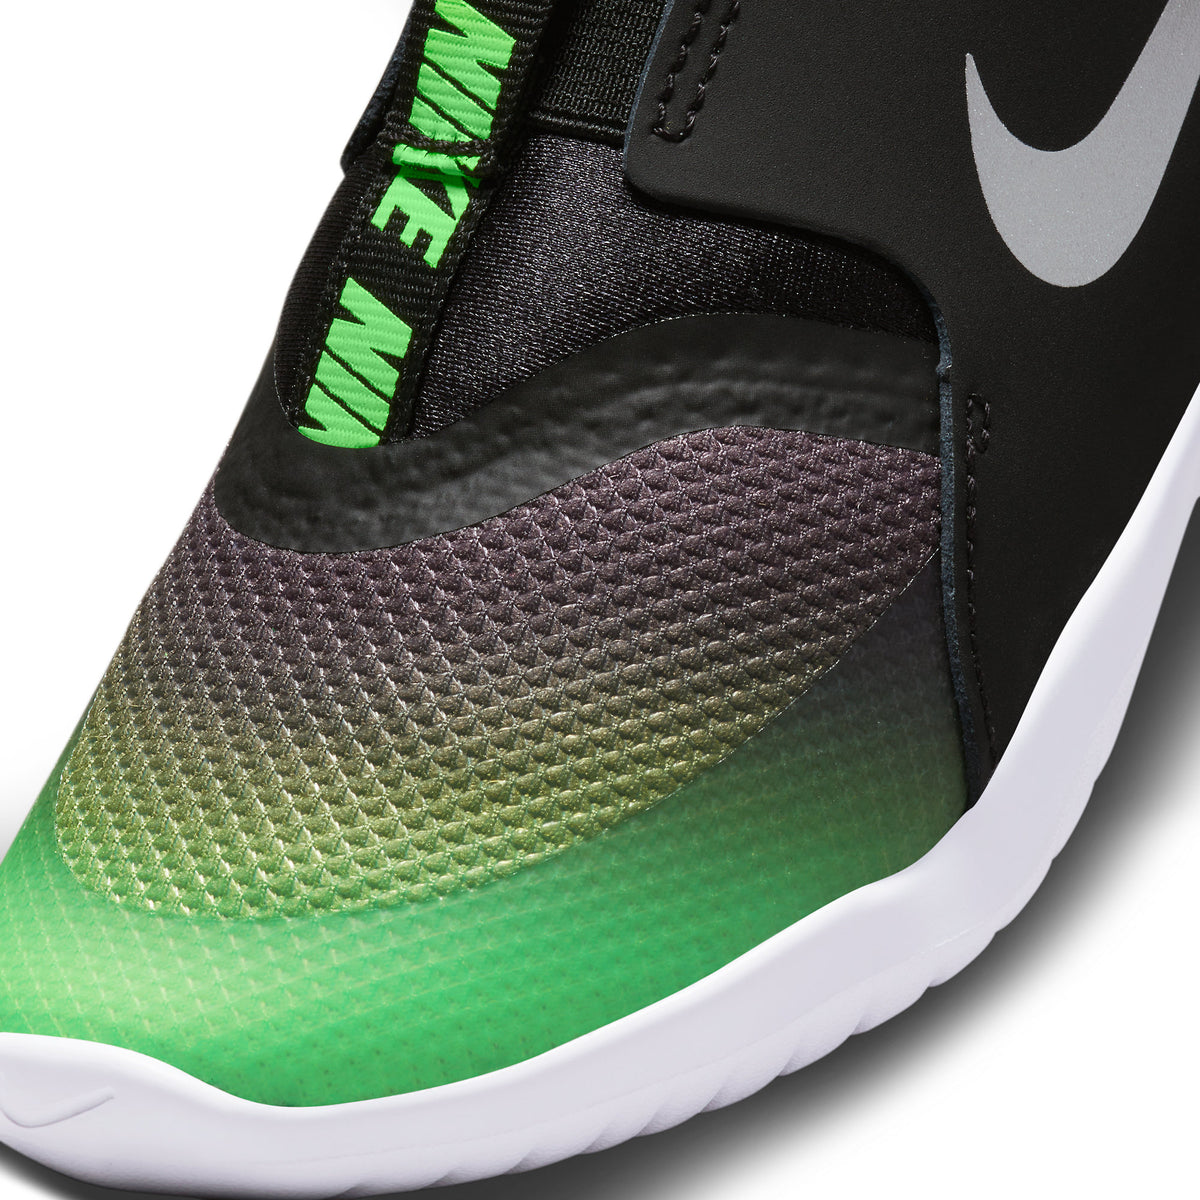 Zapatilla Nike Flex Runner de niño color Negro con Verde